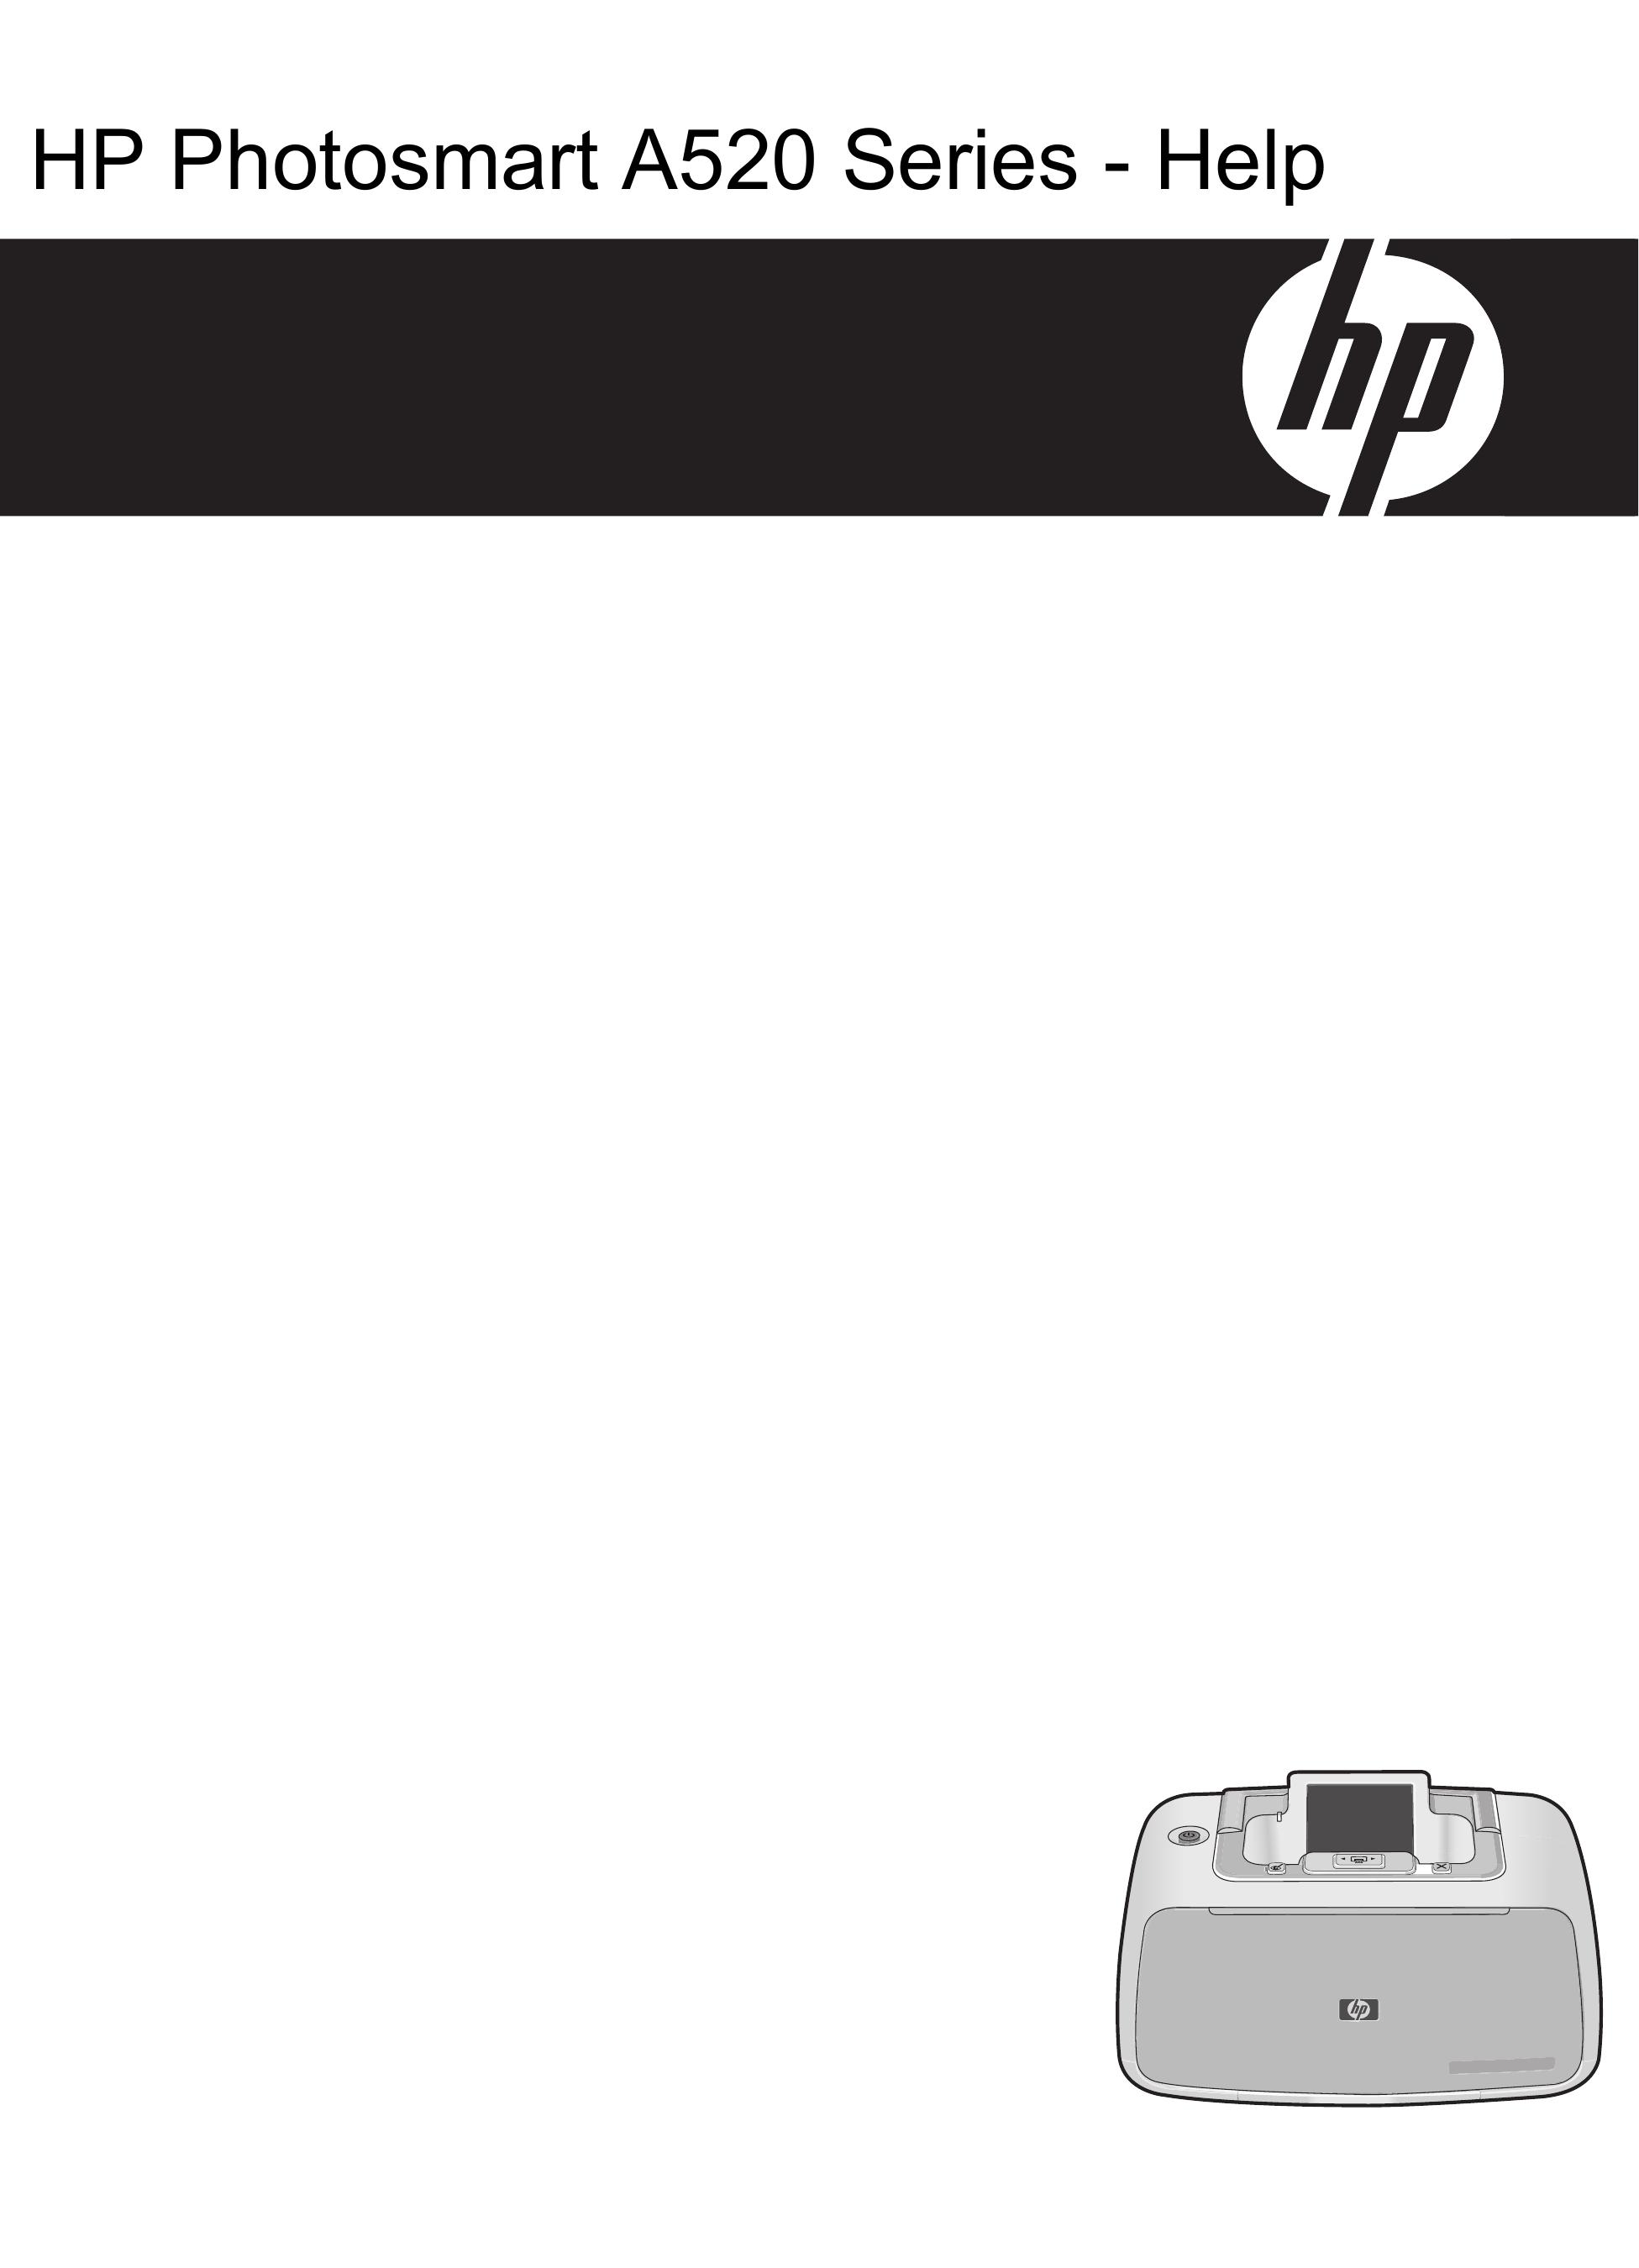 HP (Hewlett-Packard) A520 Series Photo Printer User Manual